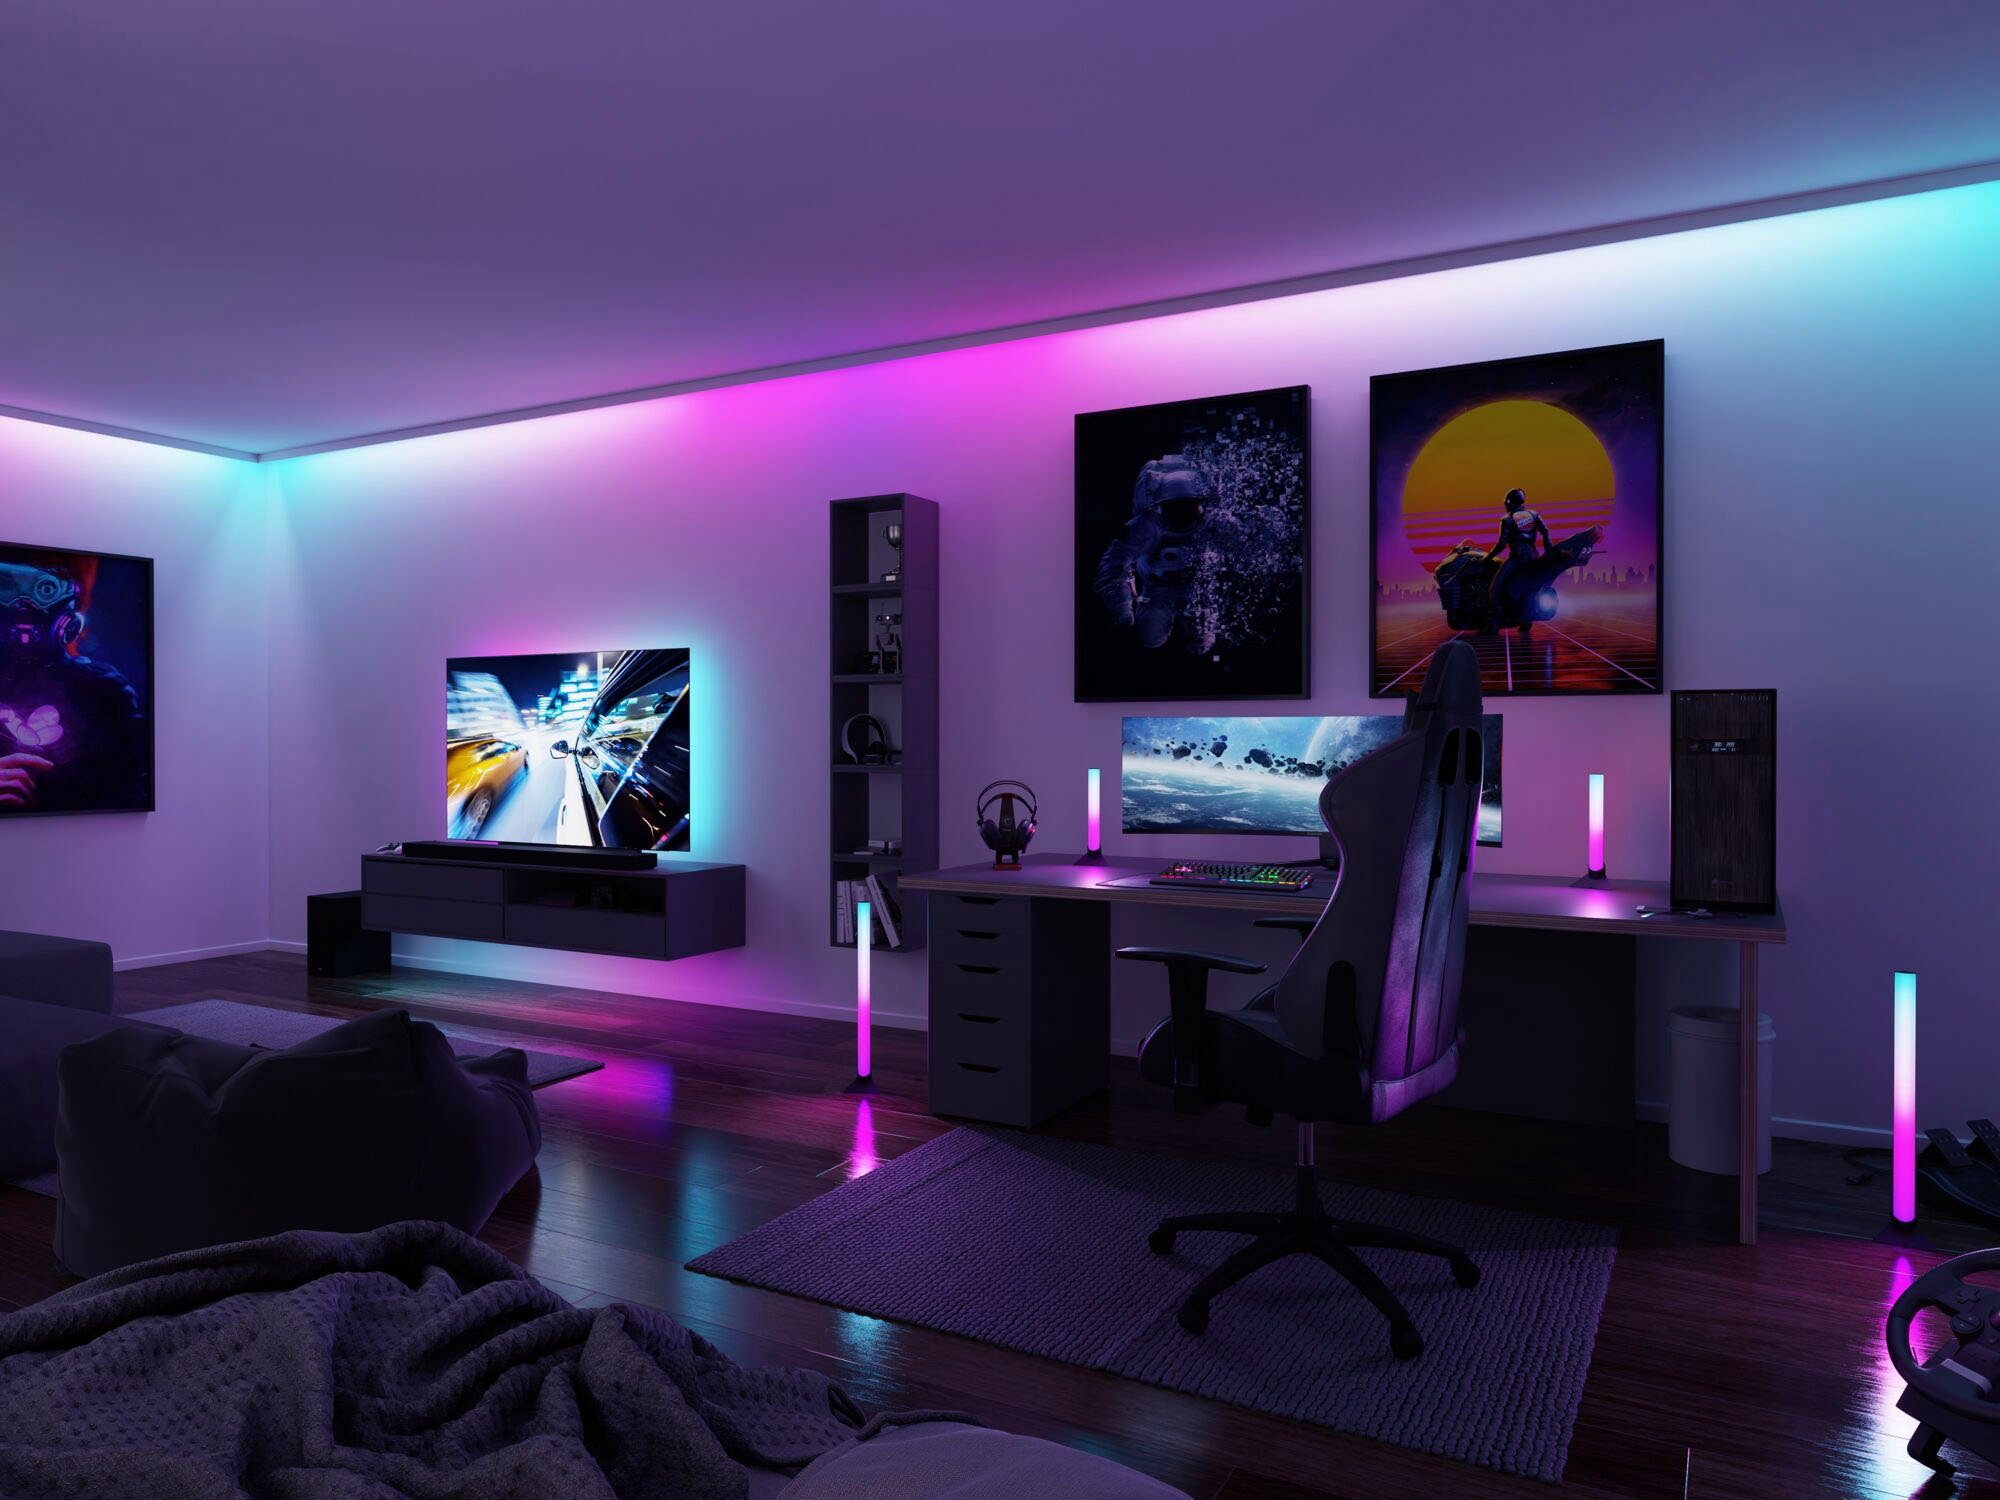 LED-Streifen 2m LED 3,5W, Strip Paulmann USB TV-Beleuchtung 1-flammig 55 Zoll Dynamic RGB Rainbow